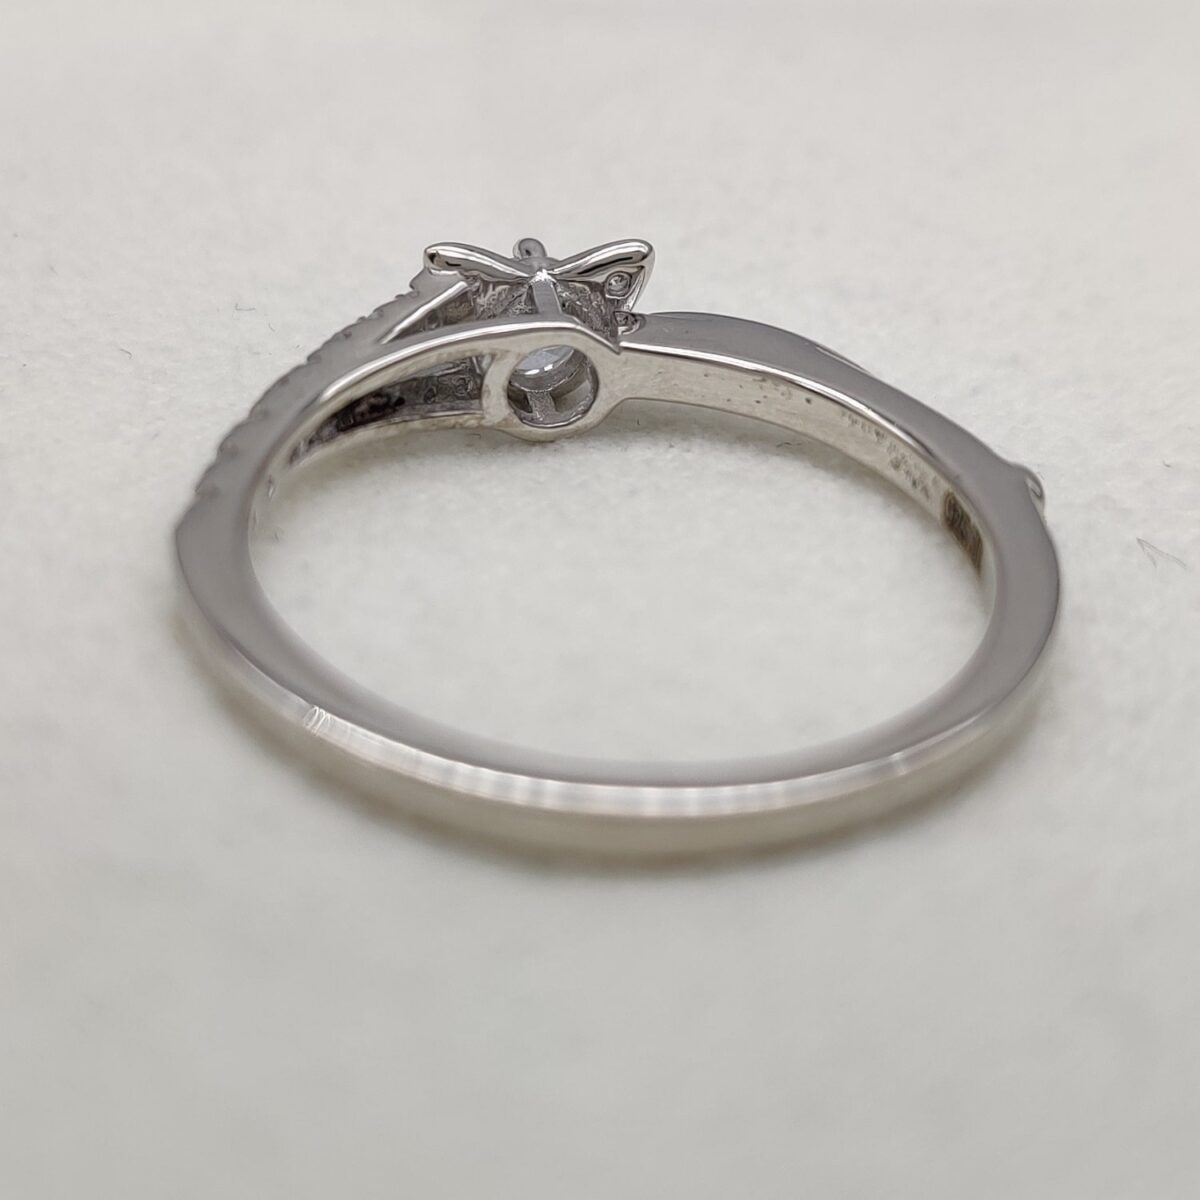 Kitty cat diamond ring (round cut lab grown diamond) pave set round diamond on band crafted 14k white gold.